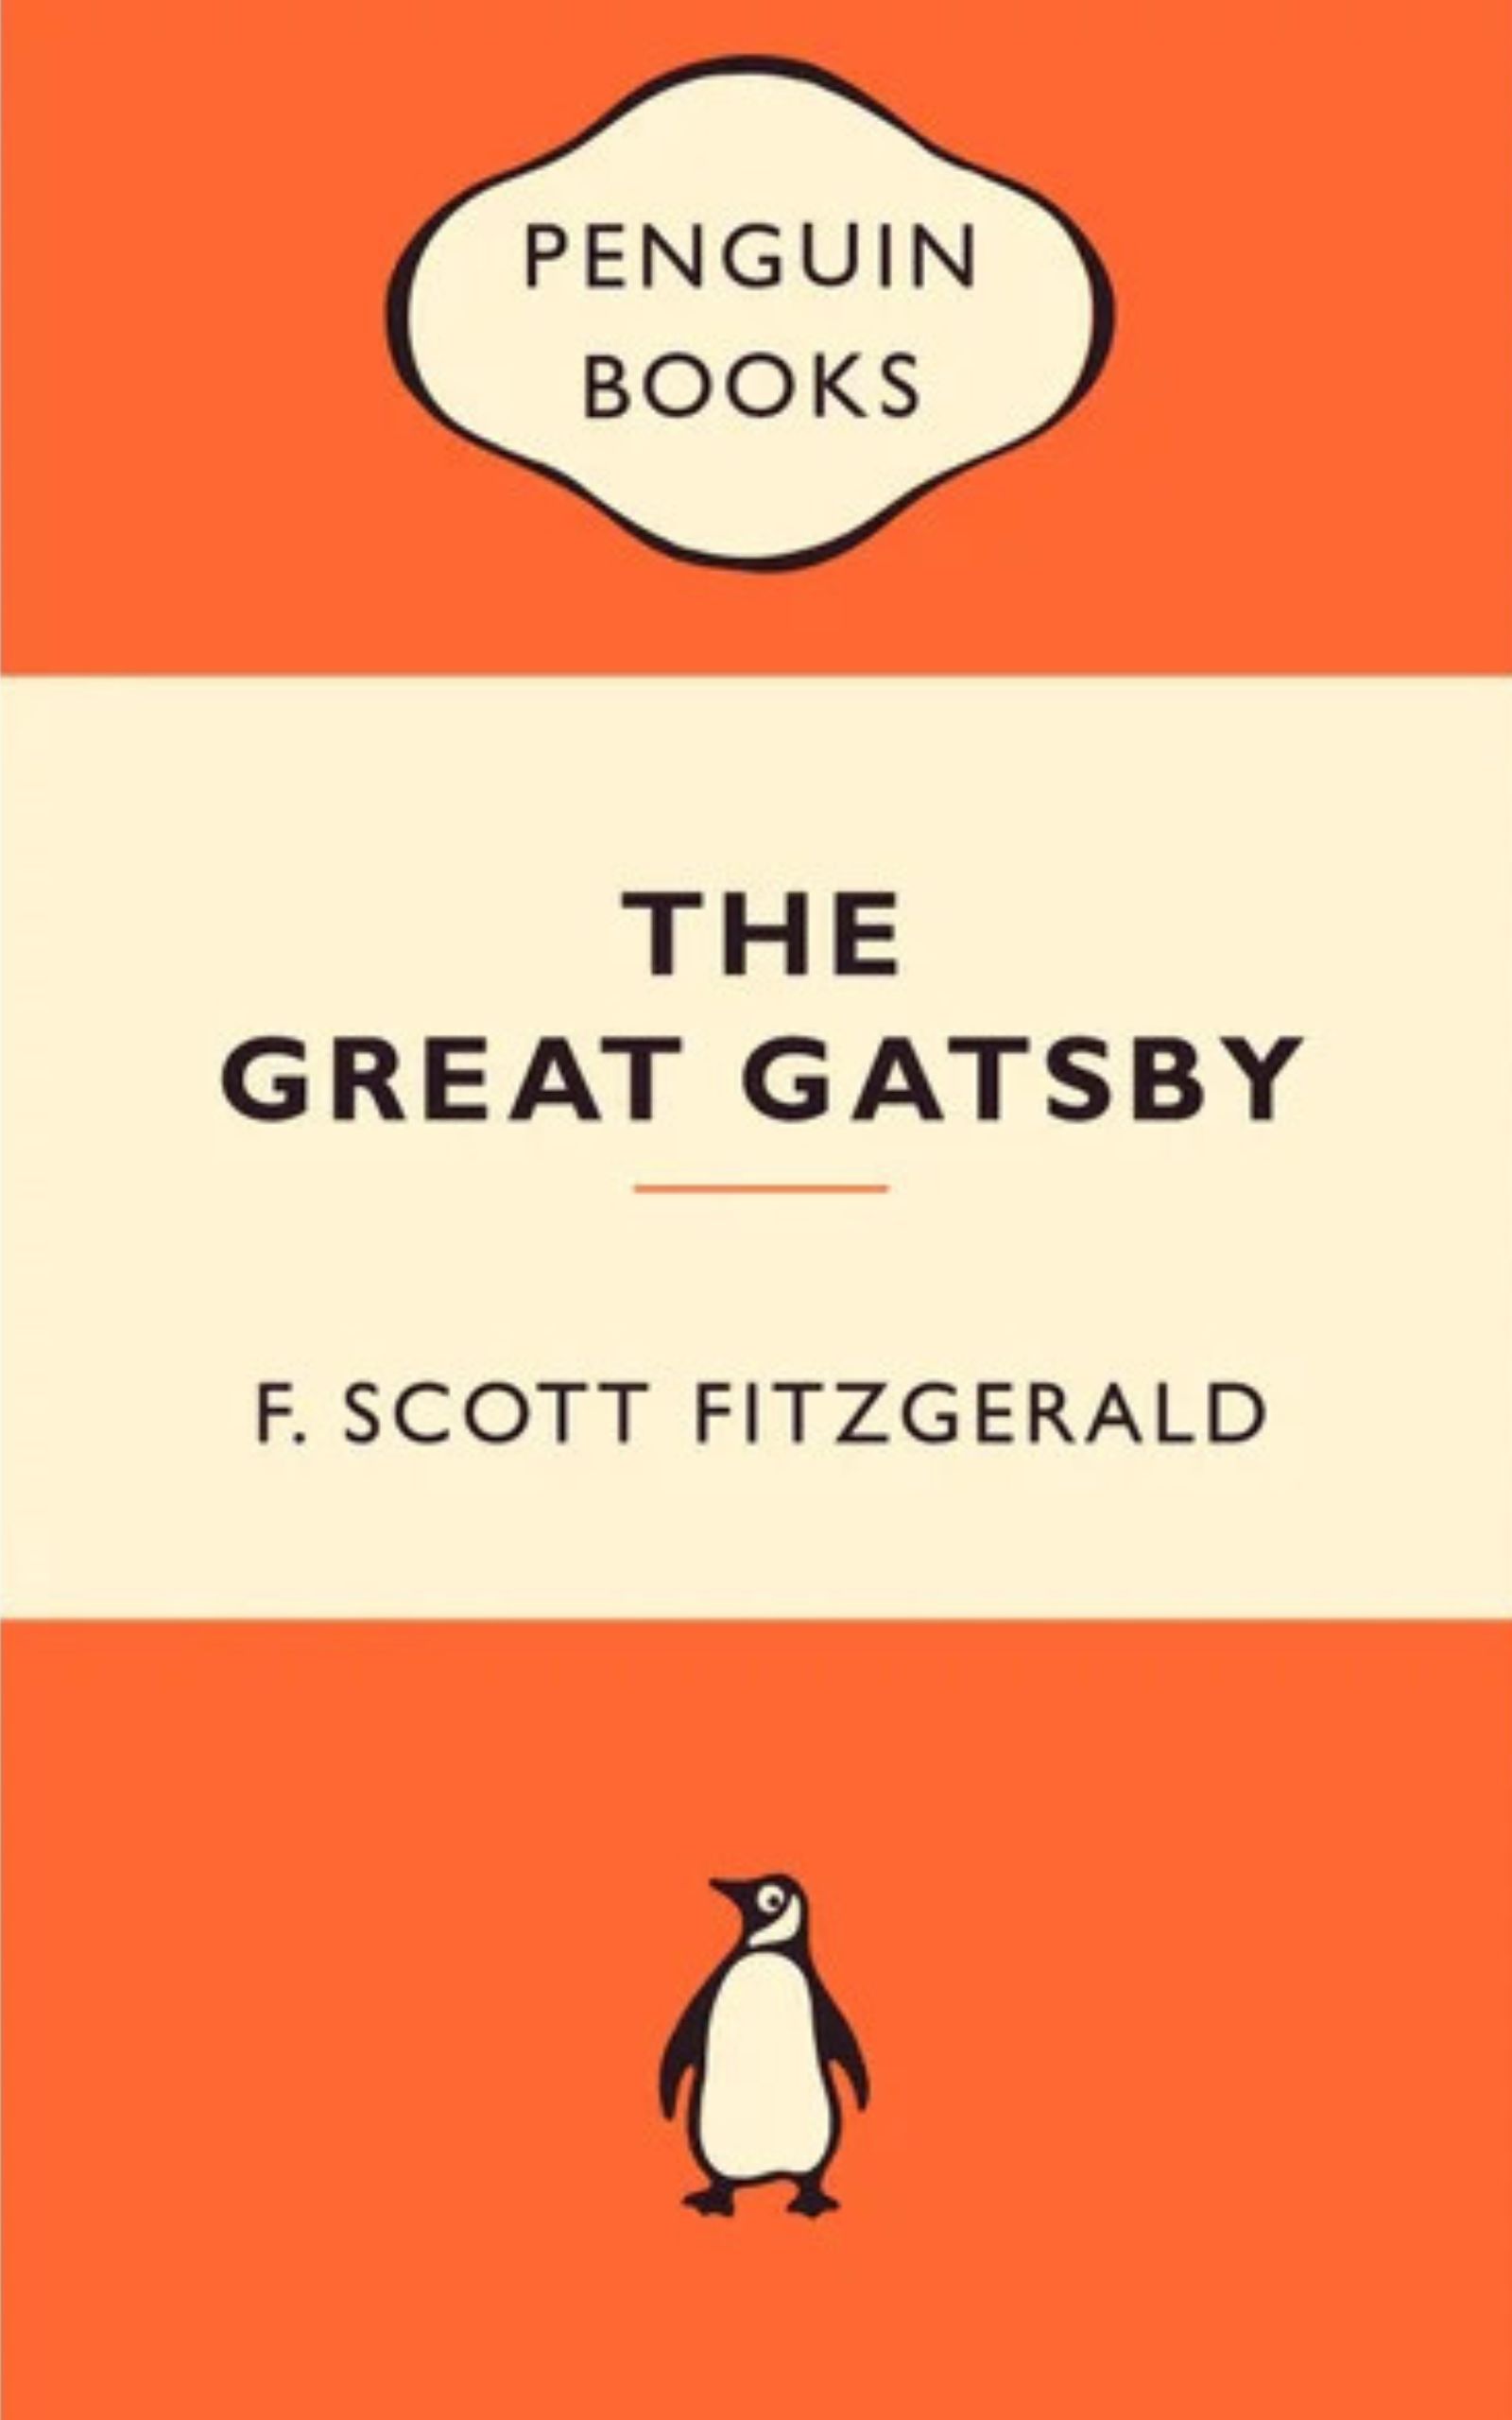 The Great Gatsby by F. Scott Fitzgerald.